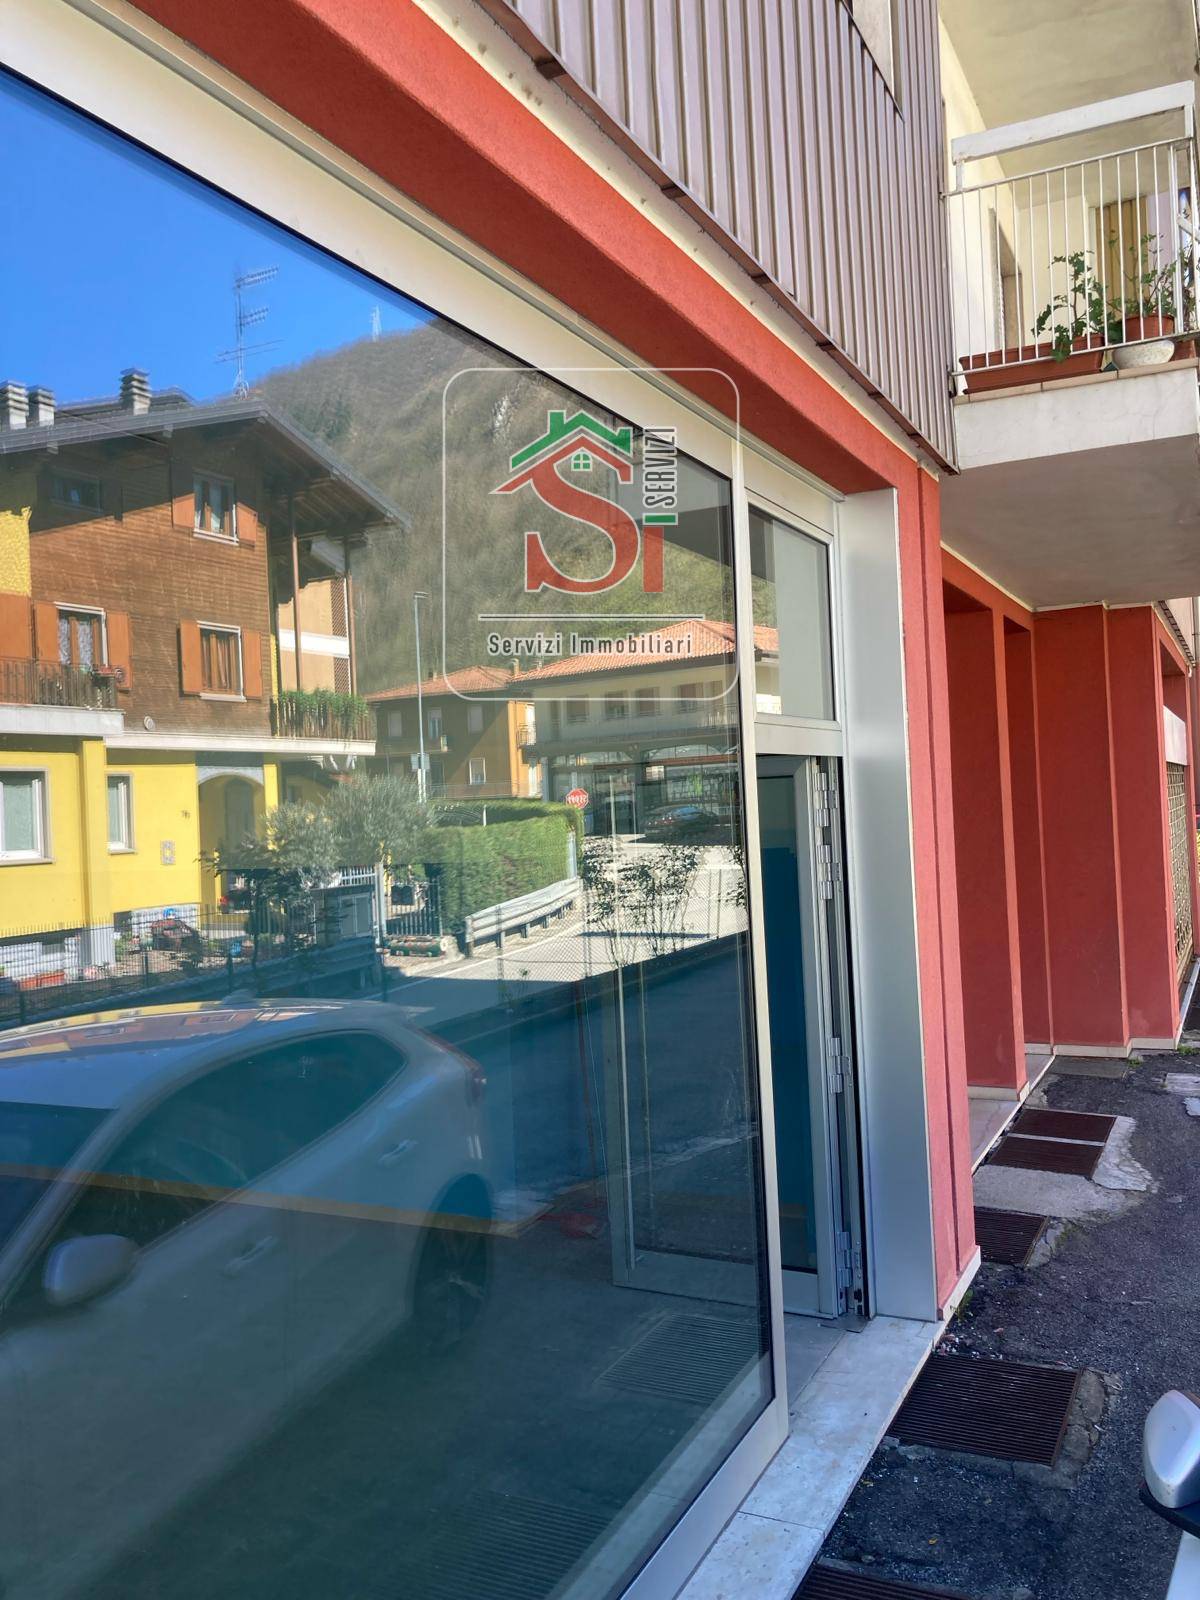 Locale commerciale in affitto a San Pellegrino Terme